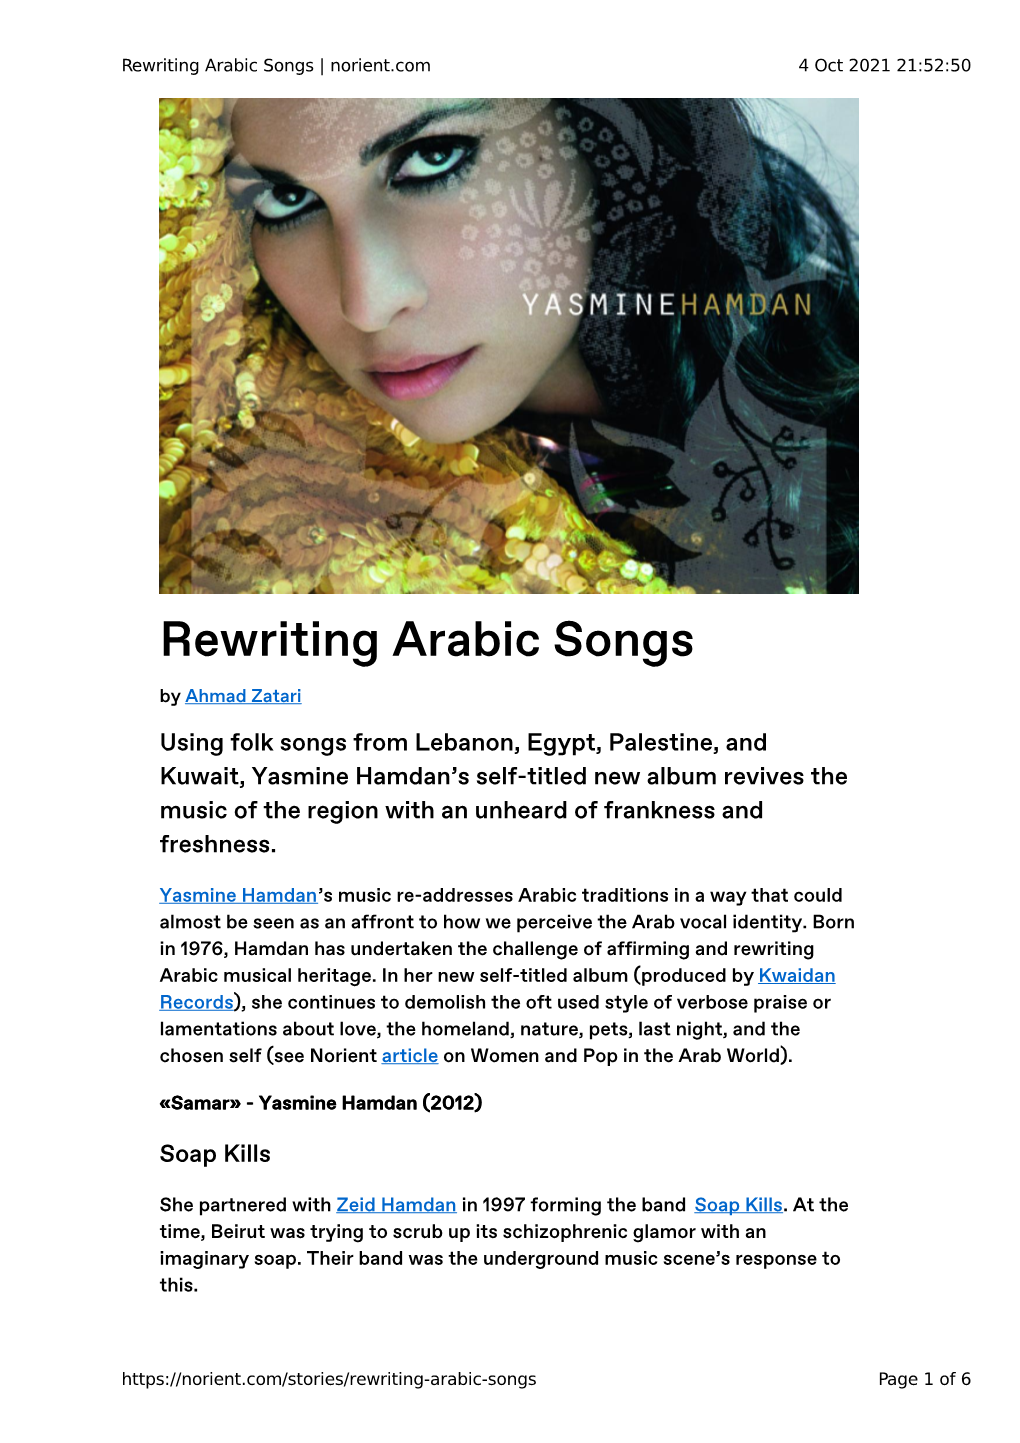 Rewriting Arabic Songs | Norient.Com 4 Oct 2021 21:52:50